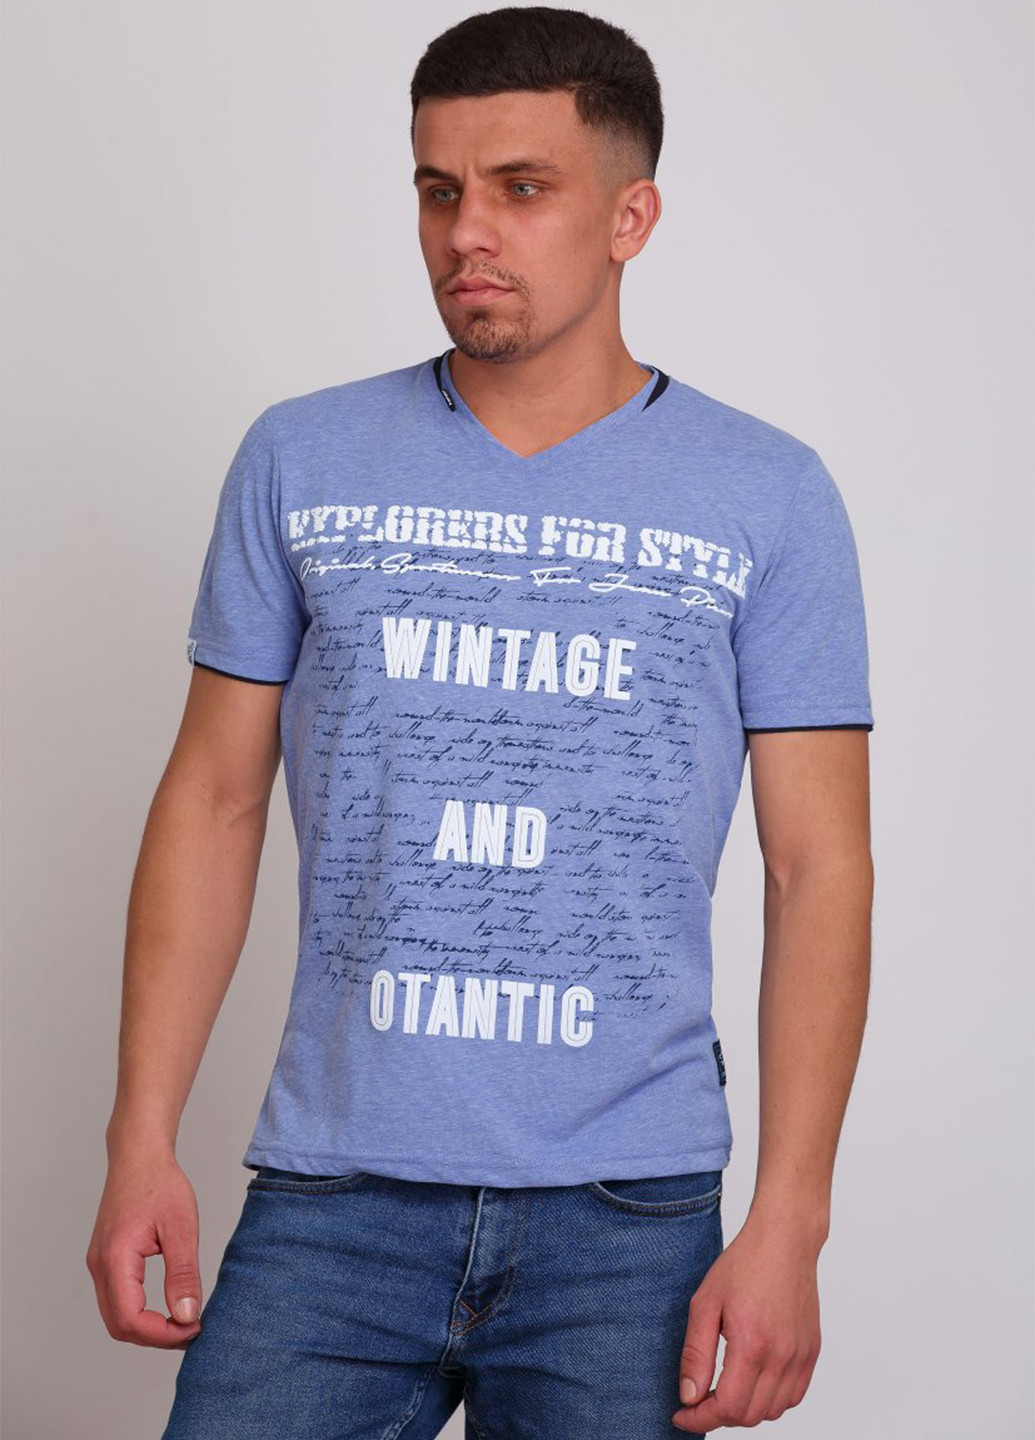 Темно-голубая футболка Trend Collection